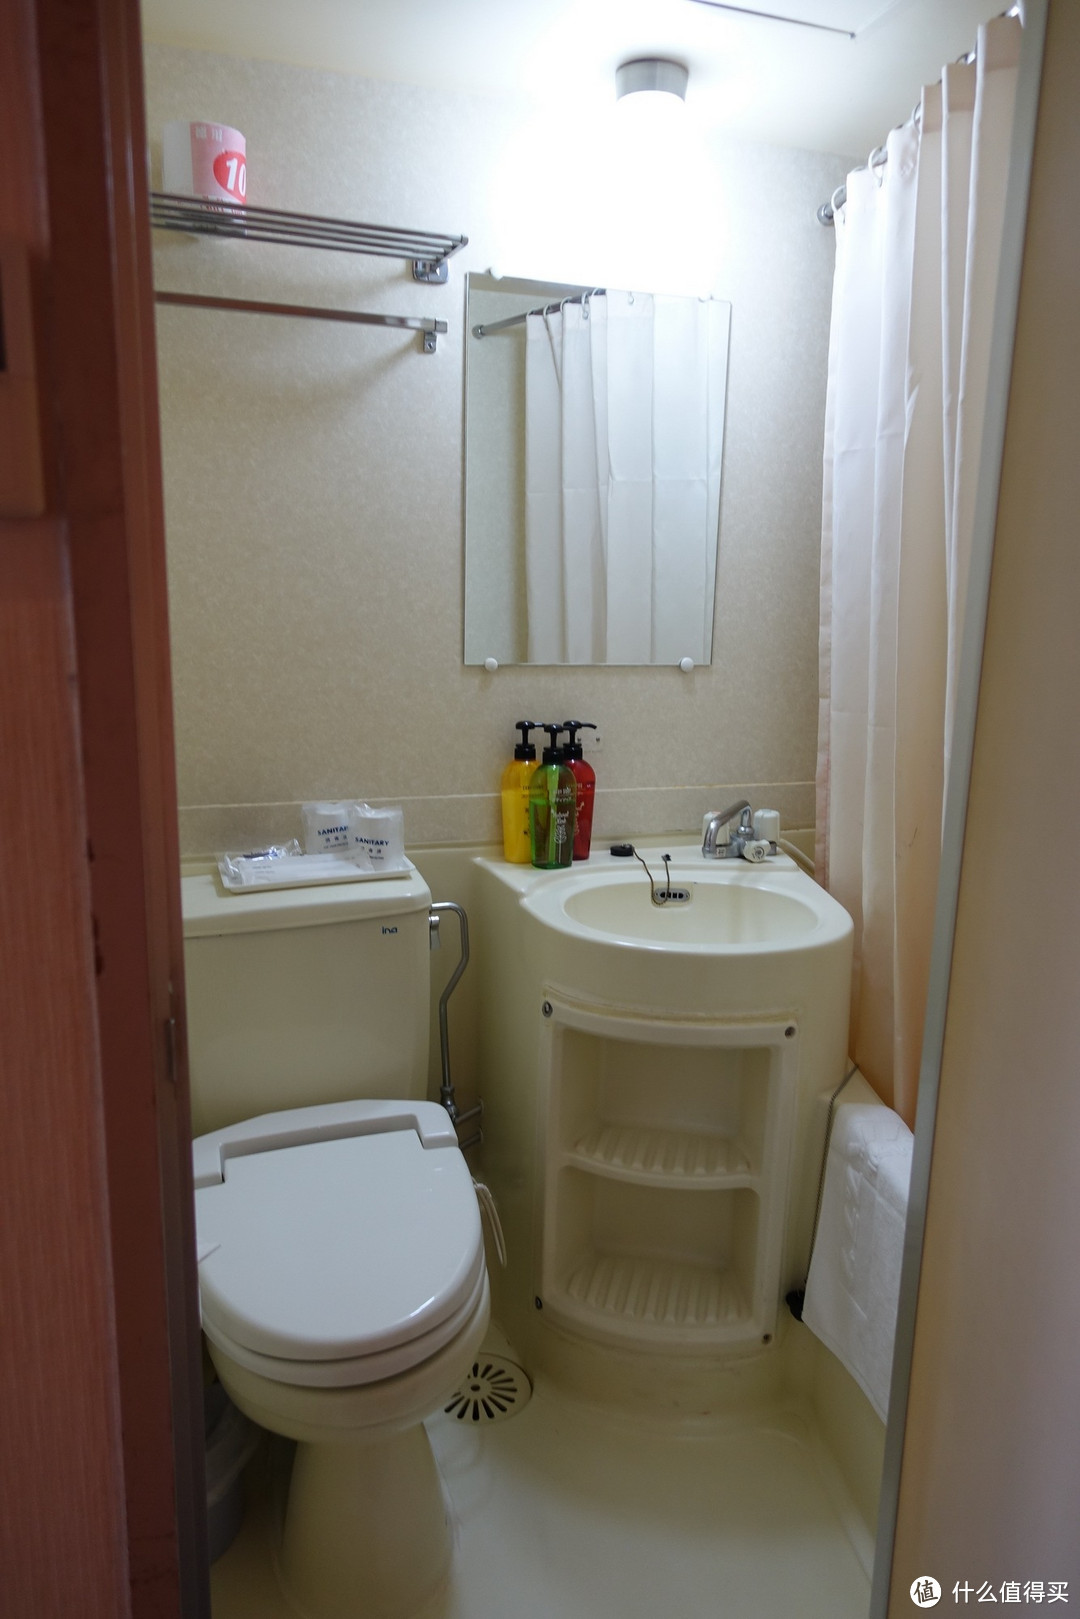 P010 - 日本的旅馆再小也是卫浴齐全